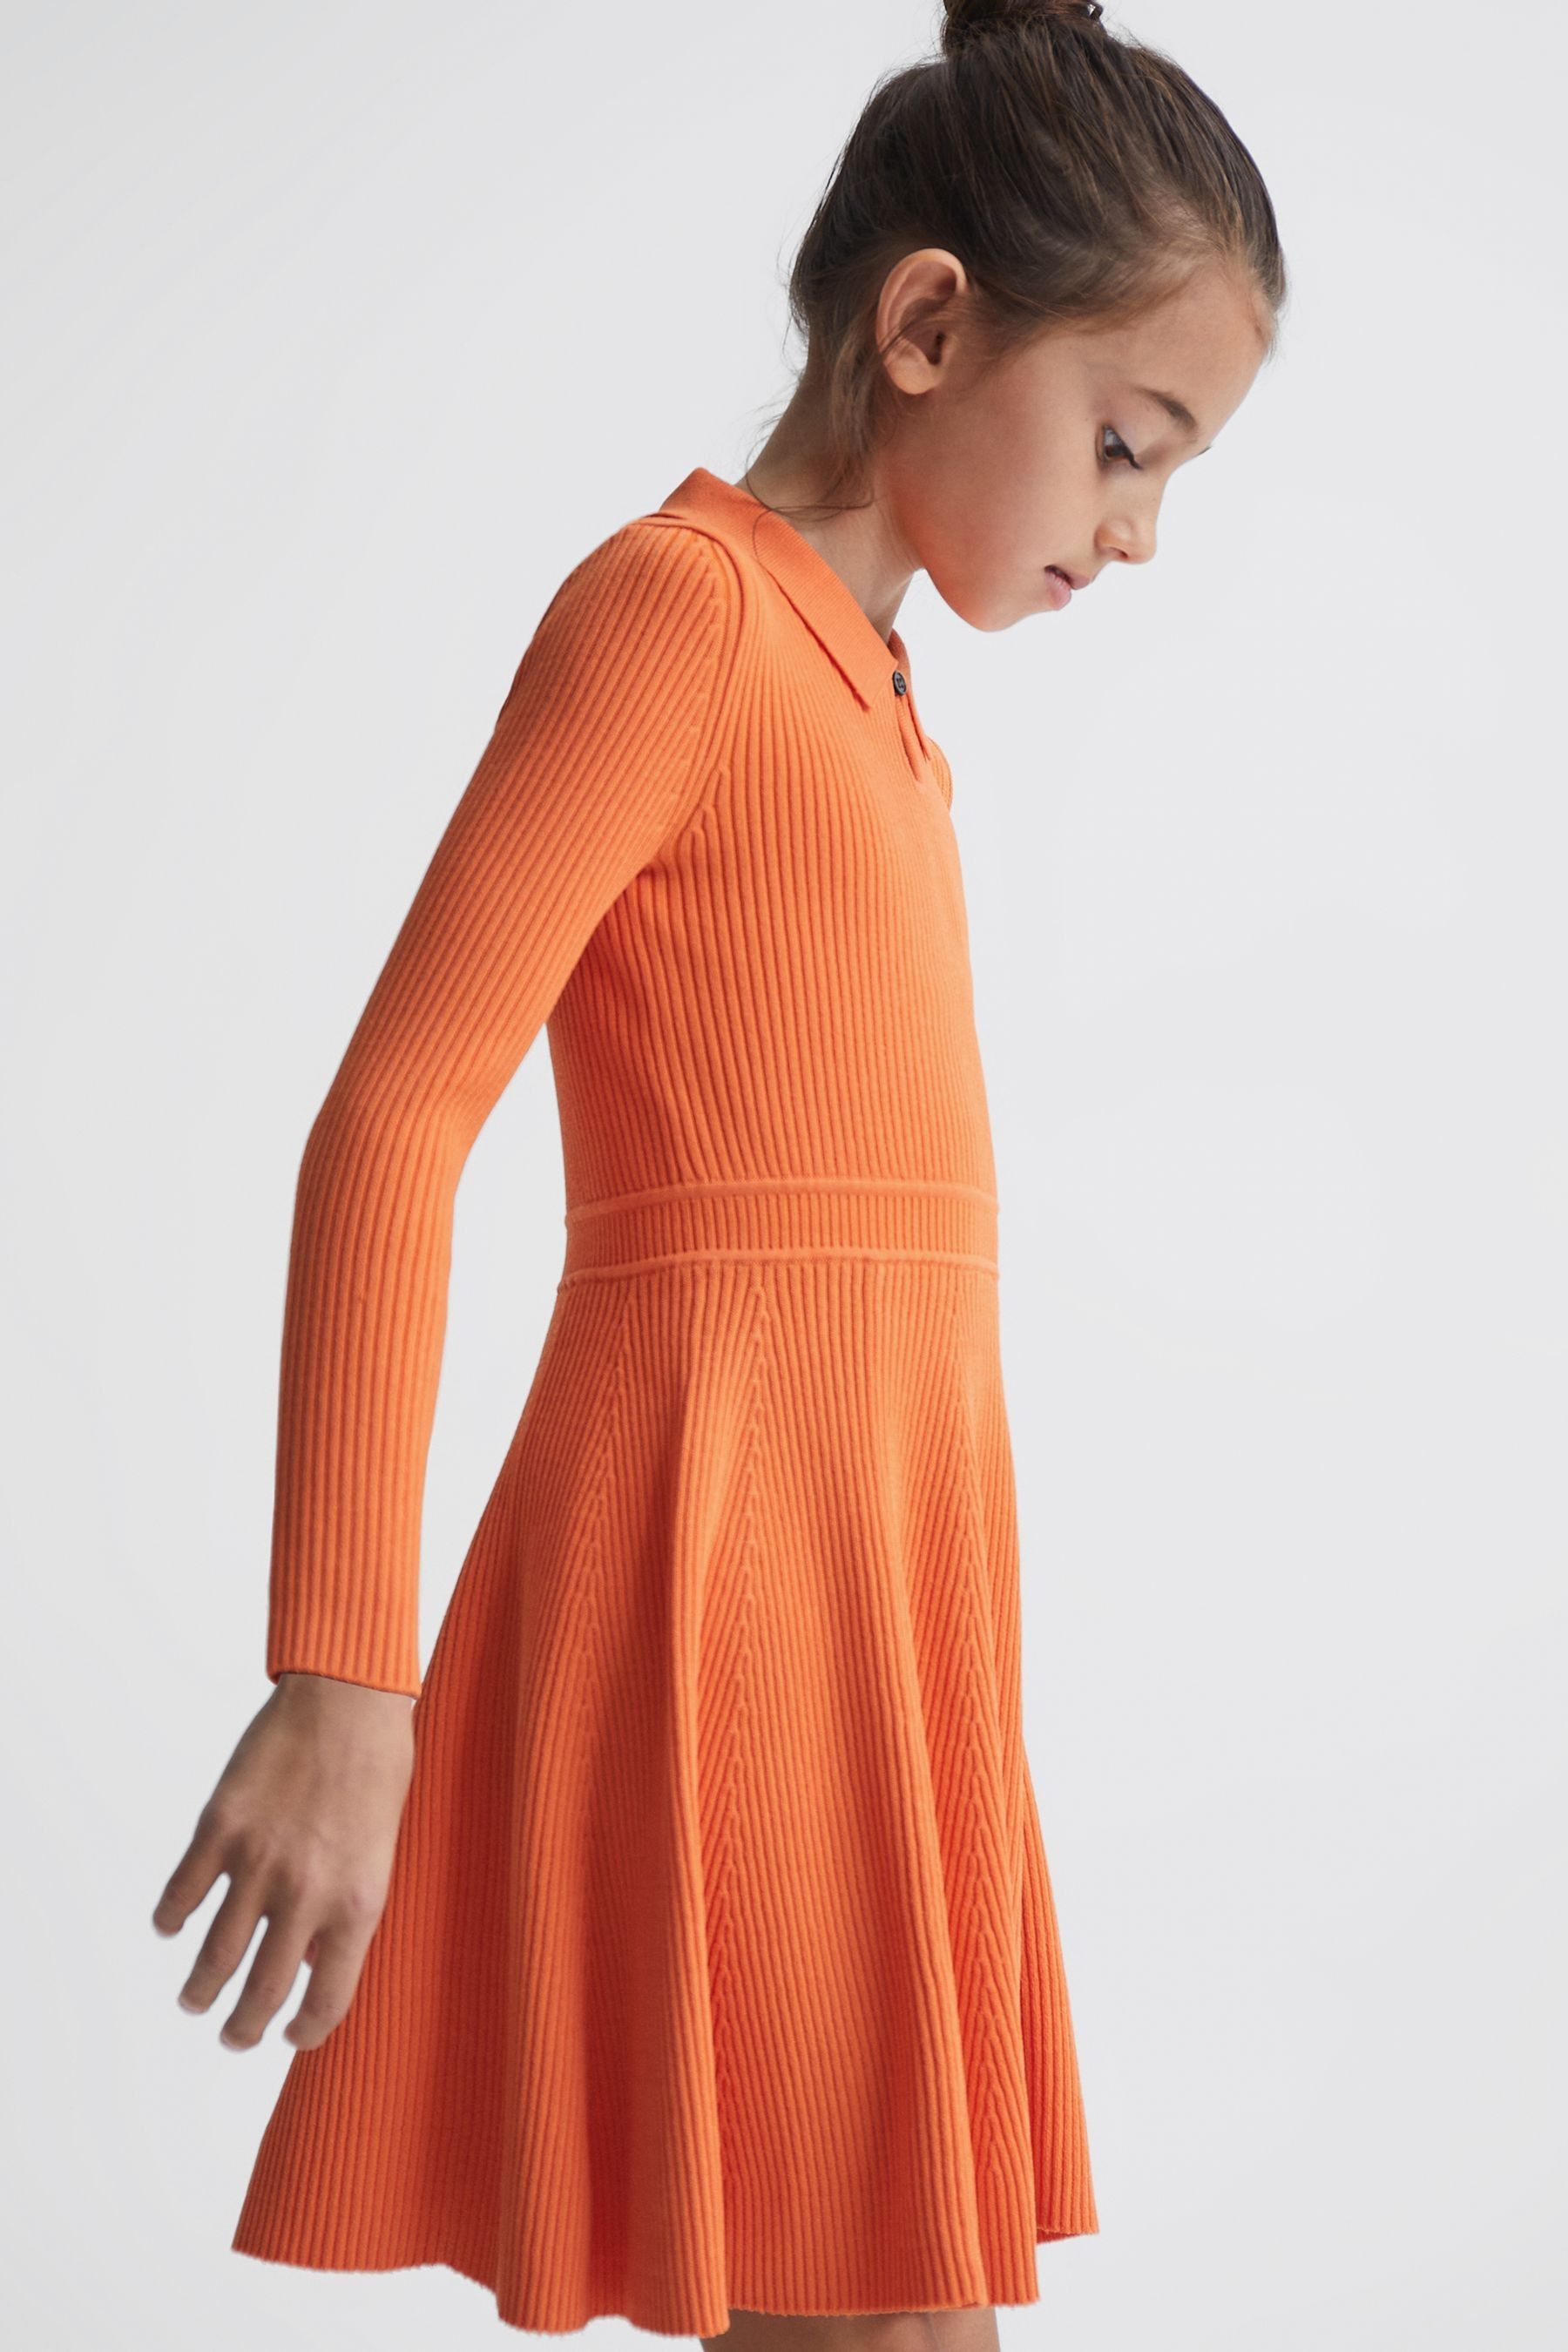 Clare - Orange Senior Knitted...